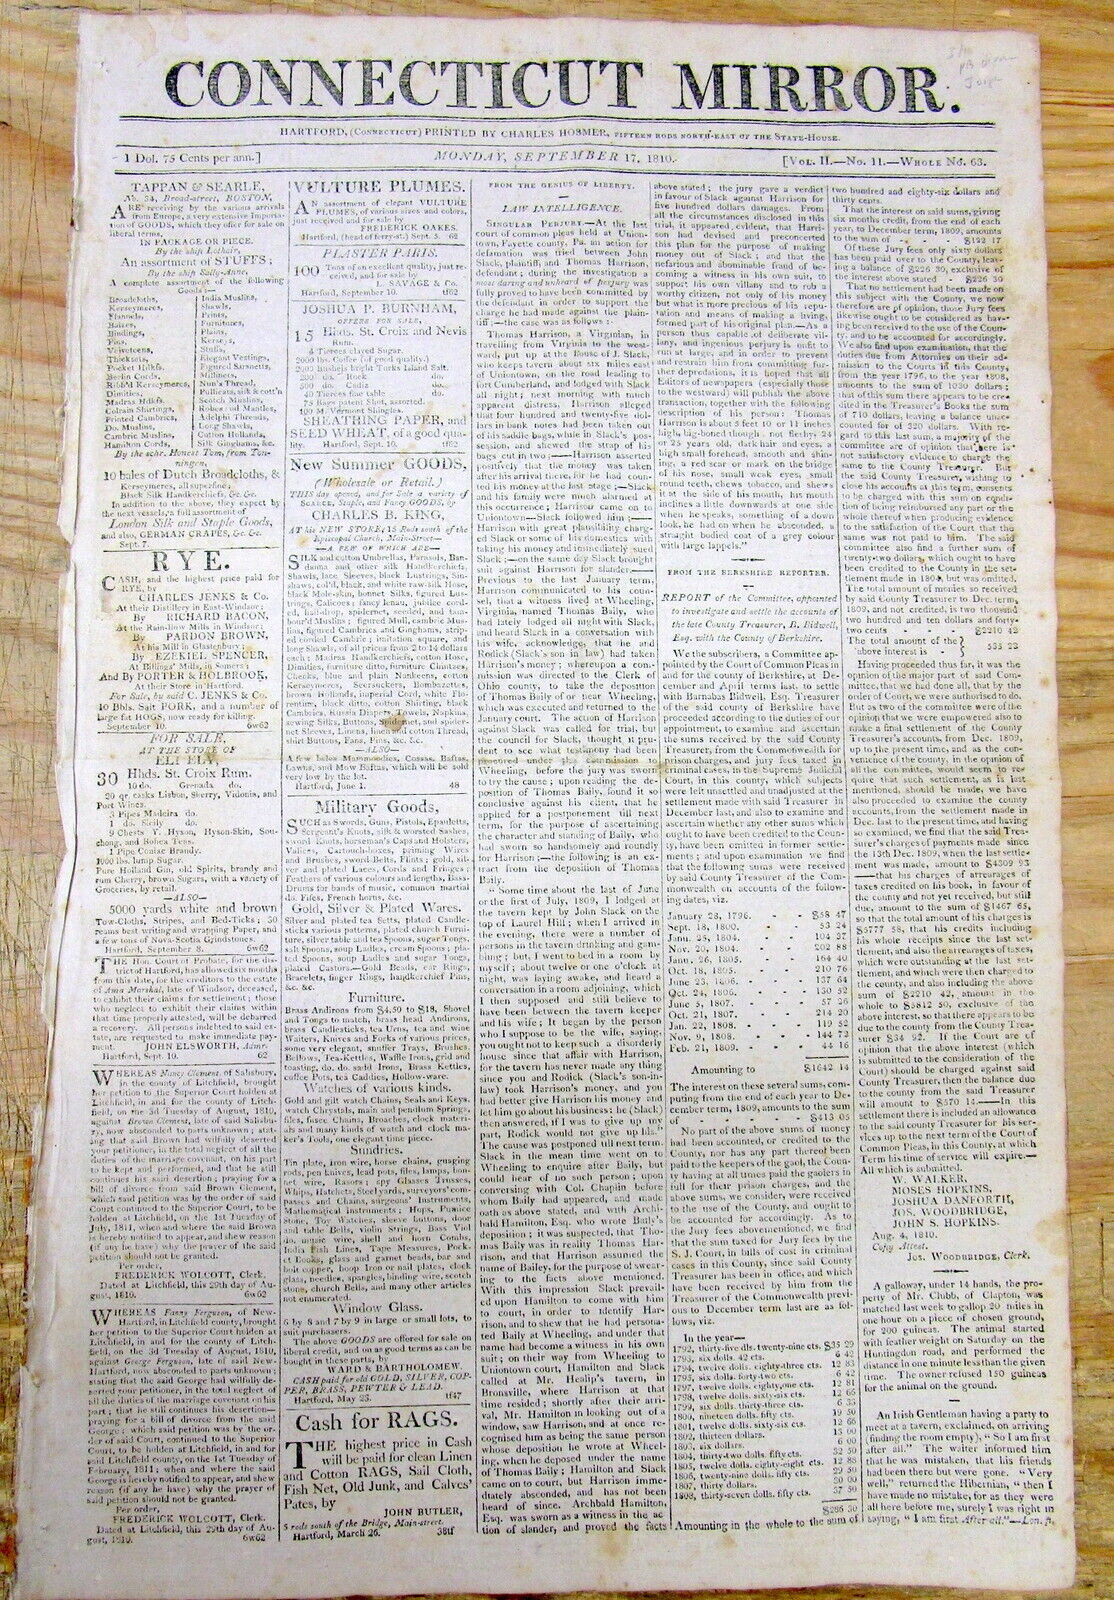 1810 newspaper w commentary on DIVORCE of NAPOLEON BONAPARTE from wife JOSEPHINE